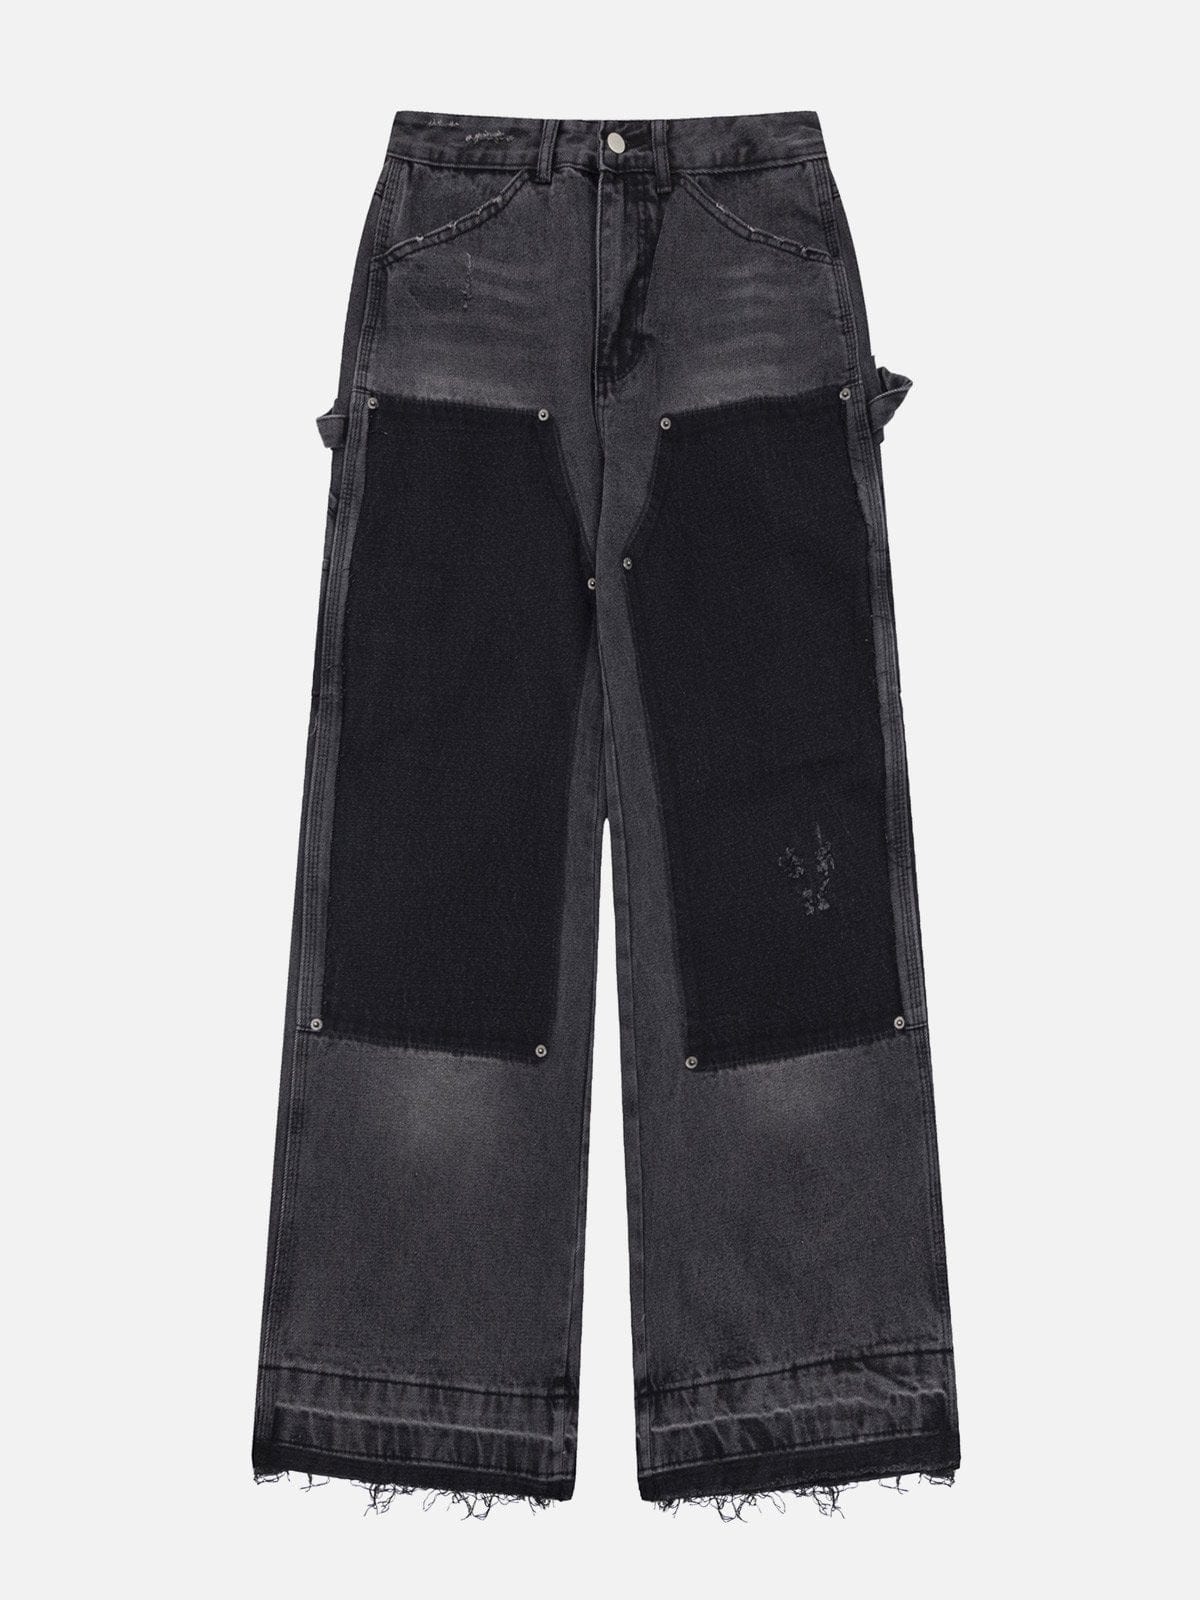 NEV Irregular Raw Edge Splicing Jeans